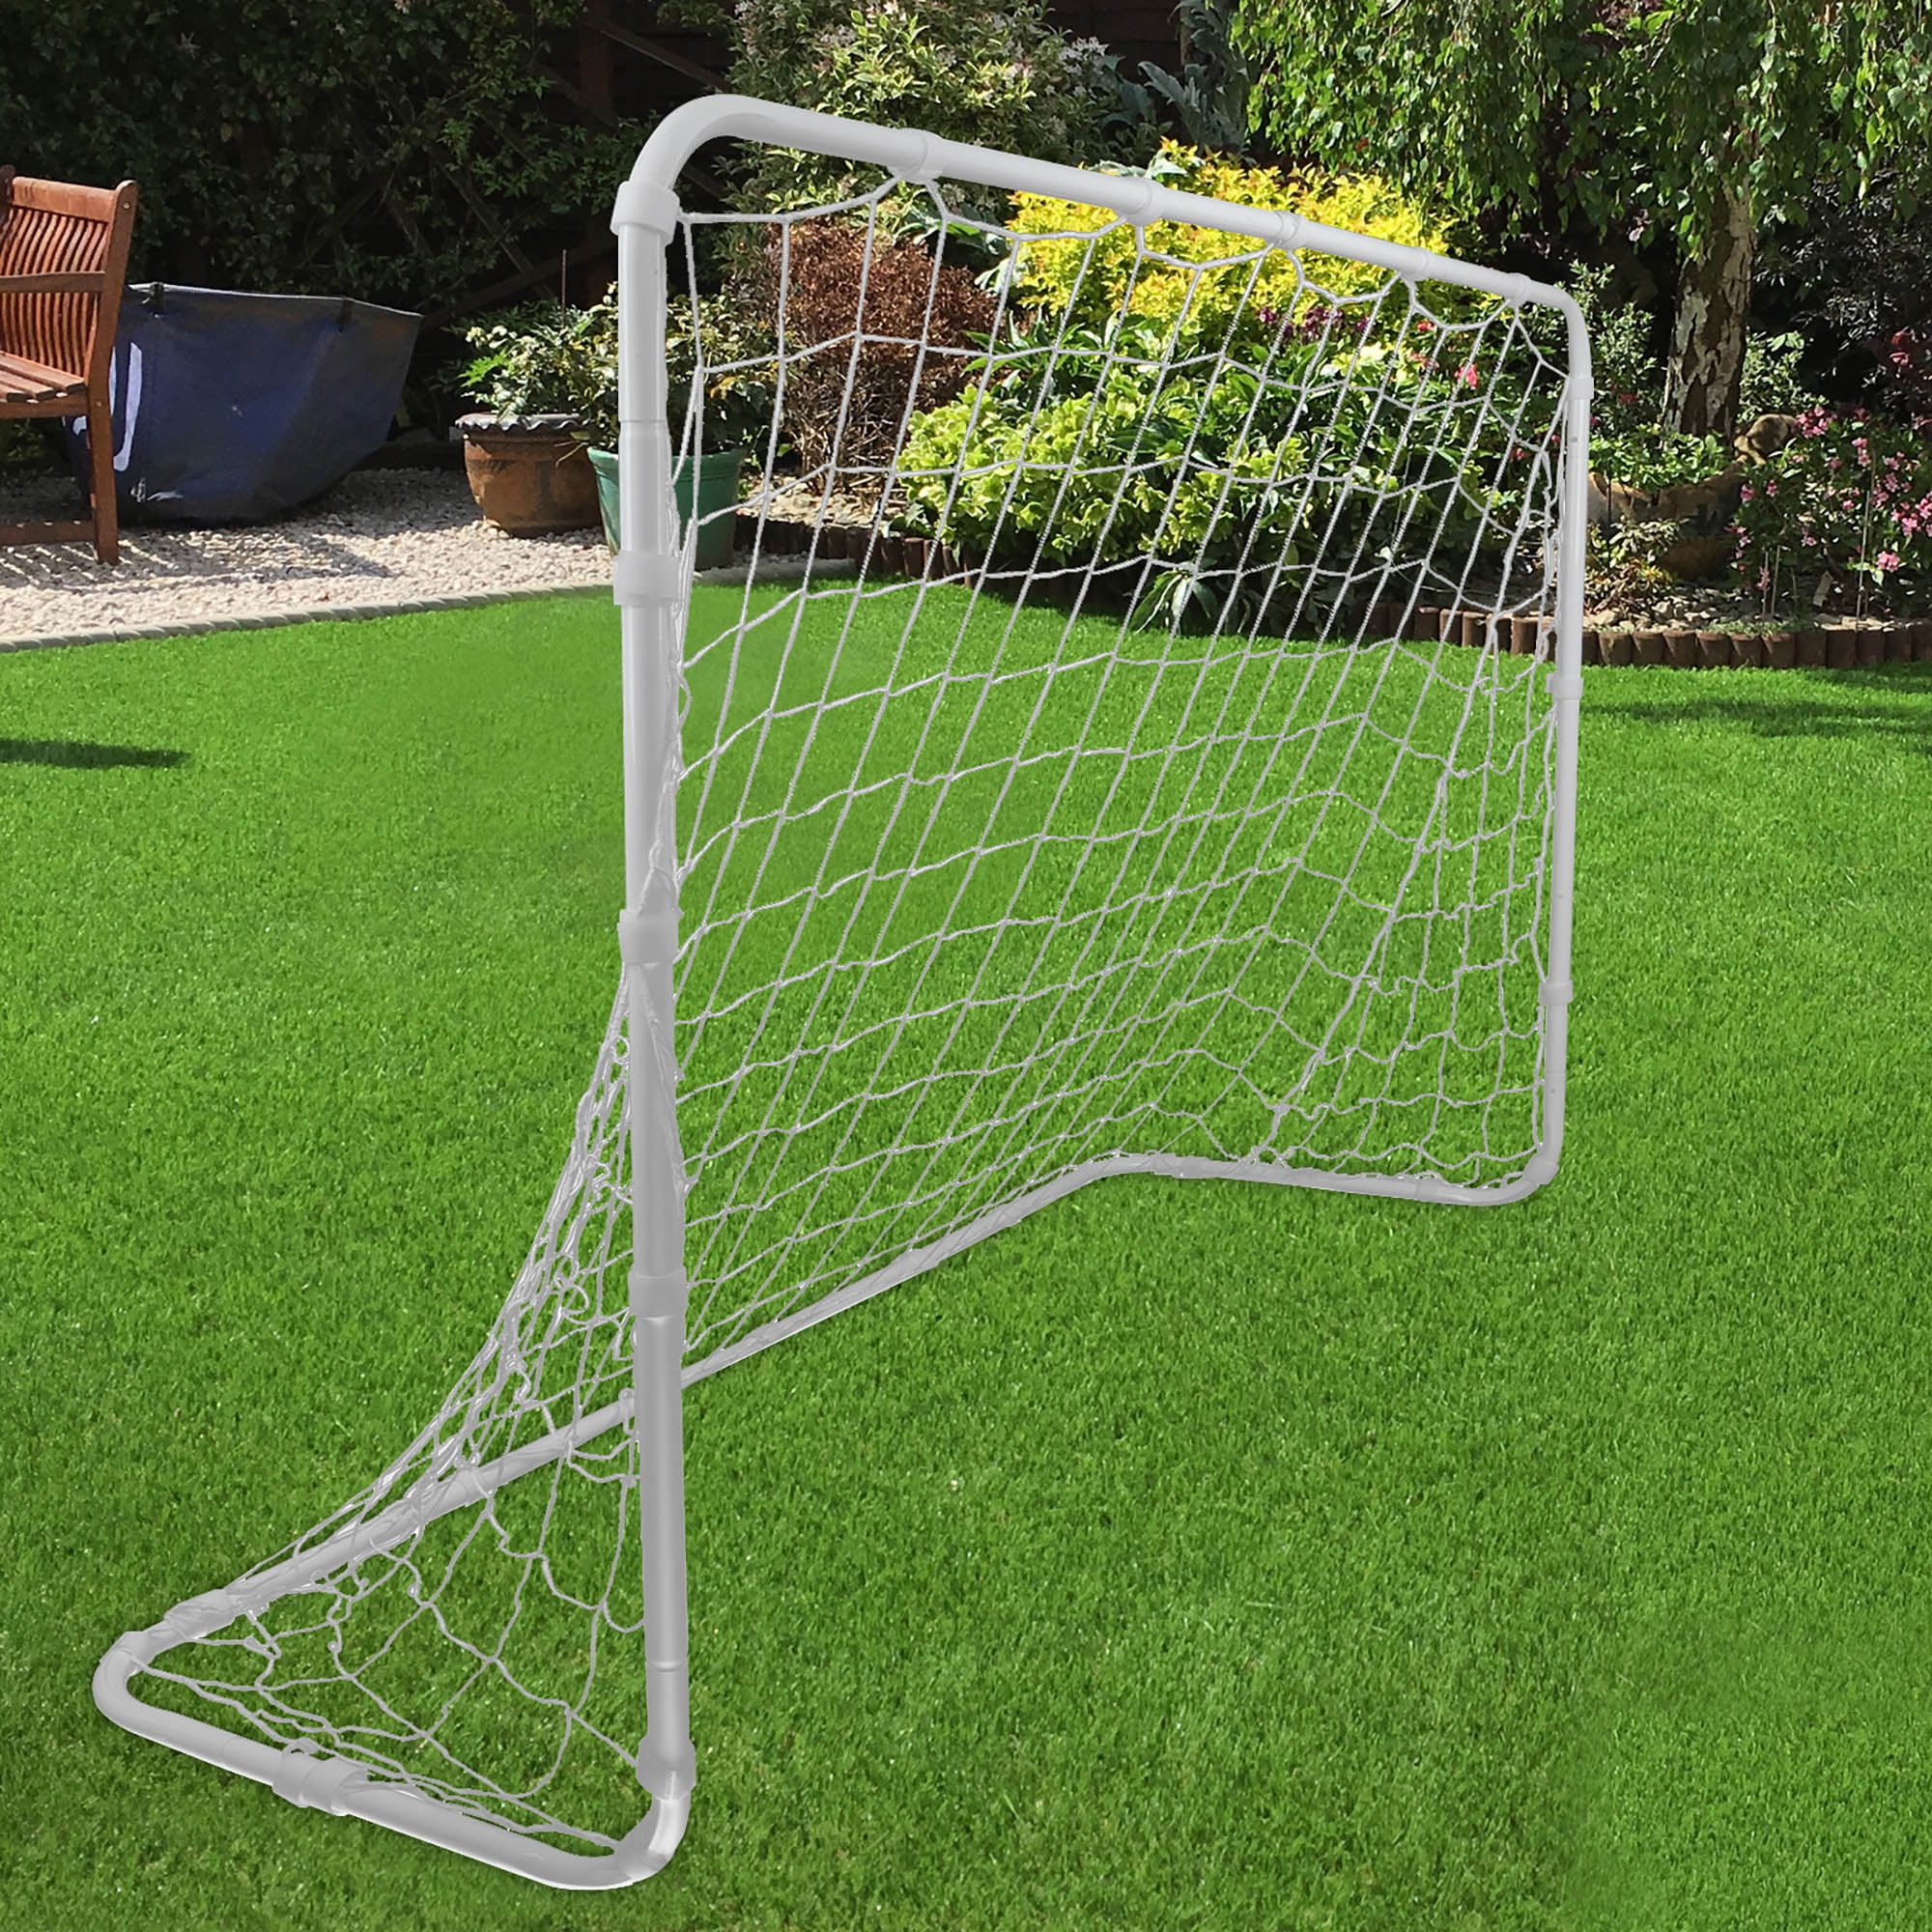 Football Soccer Goal Posts Net Target Sheet Set Outdoor Practice Training Aid 